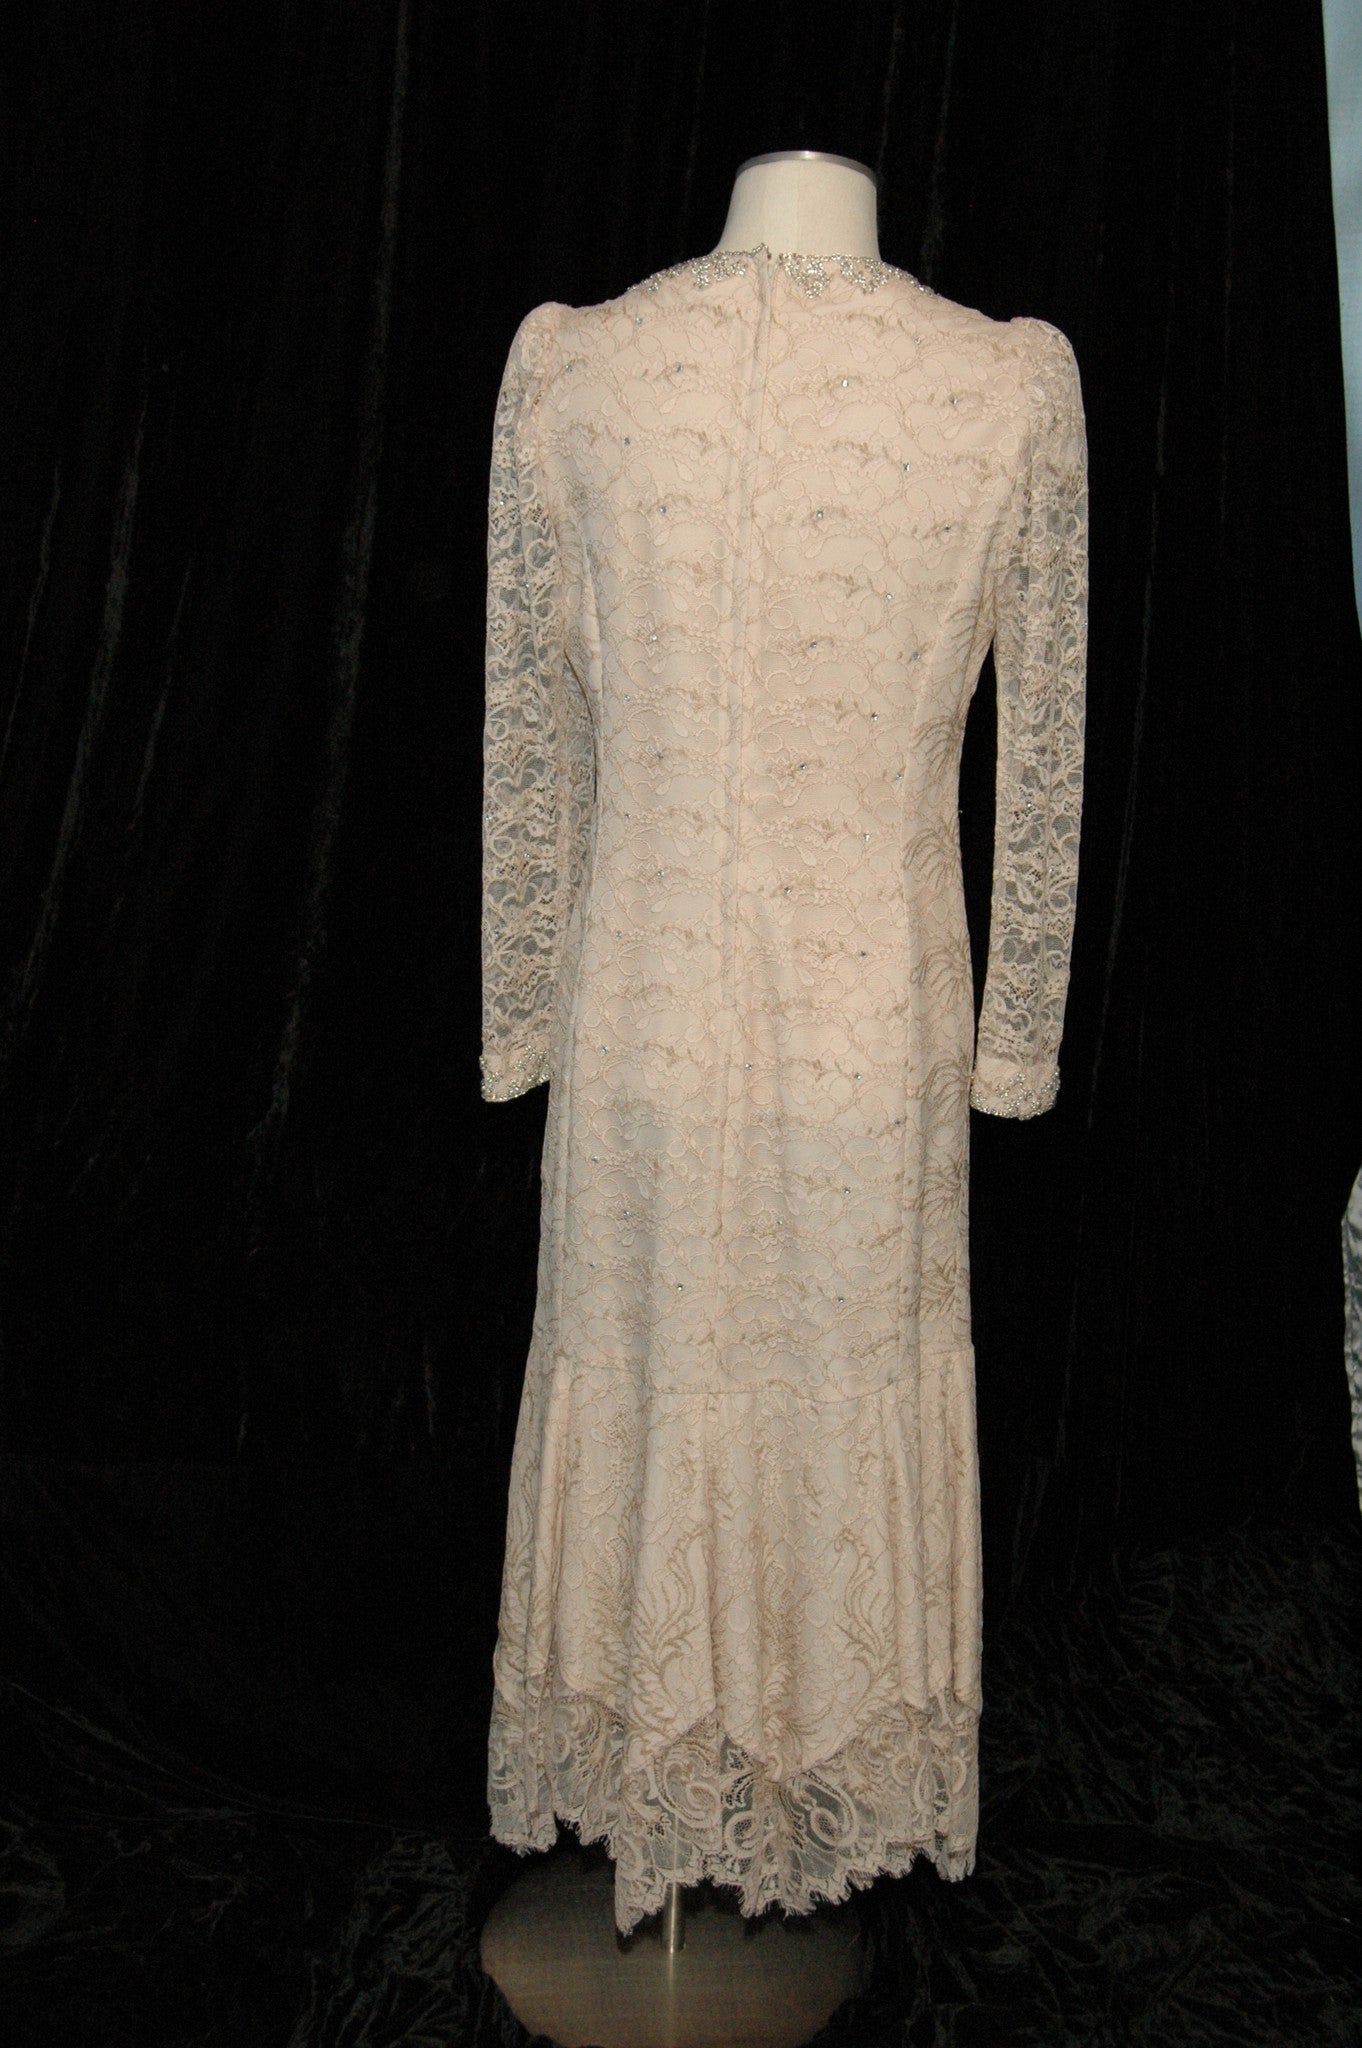 Vintage Beige Lace Dress 68